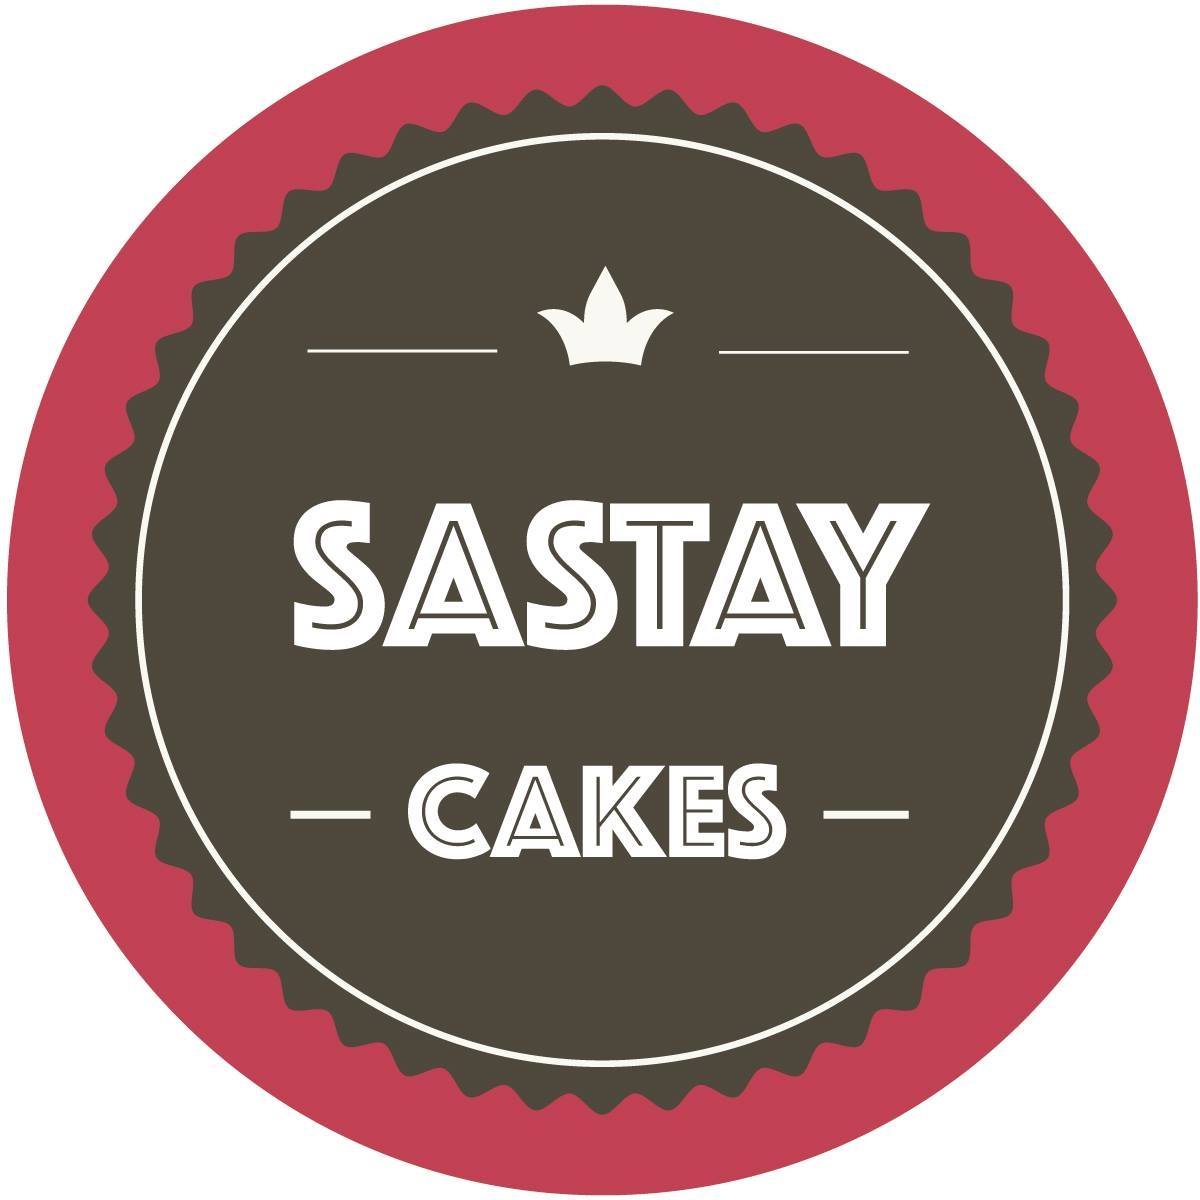 Sastay Cakes